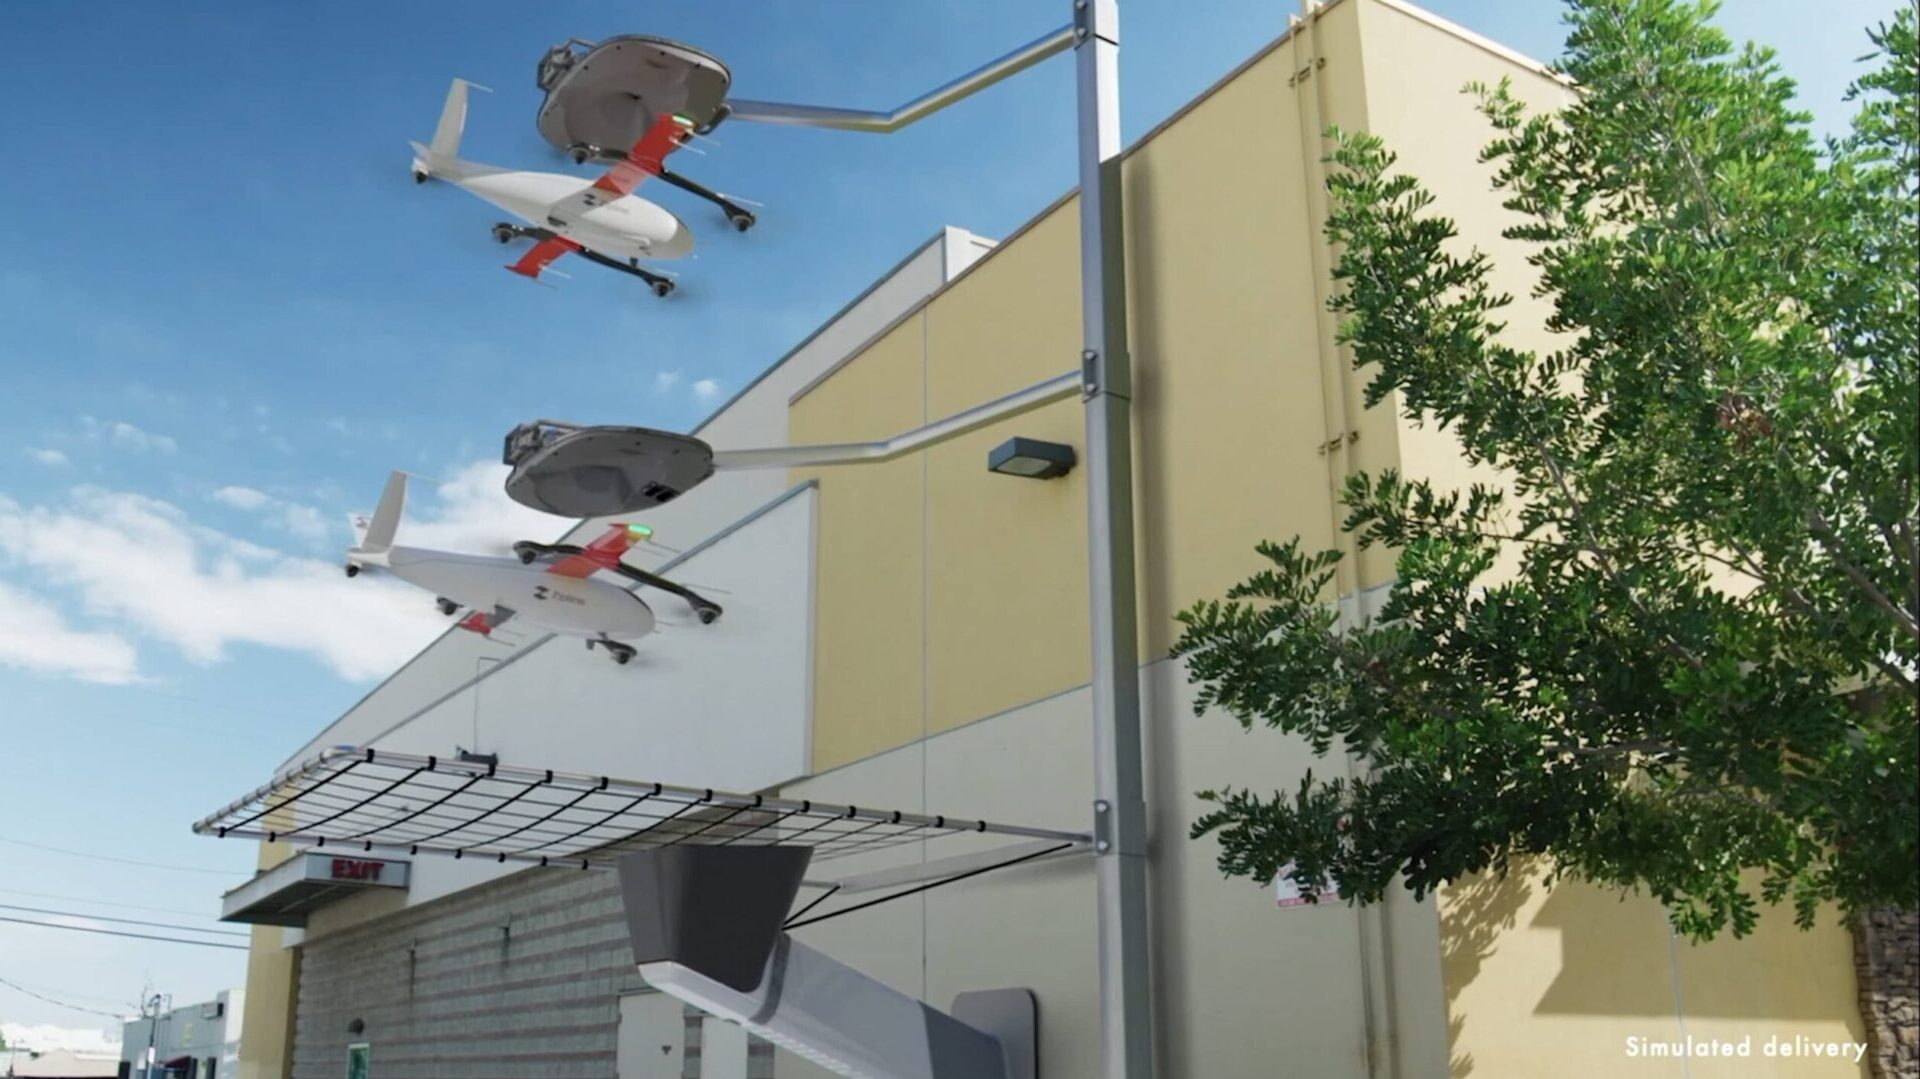 on-demand zipline drone delivery